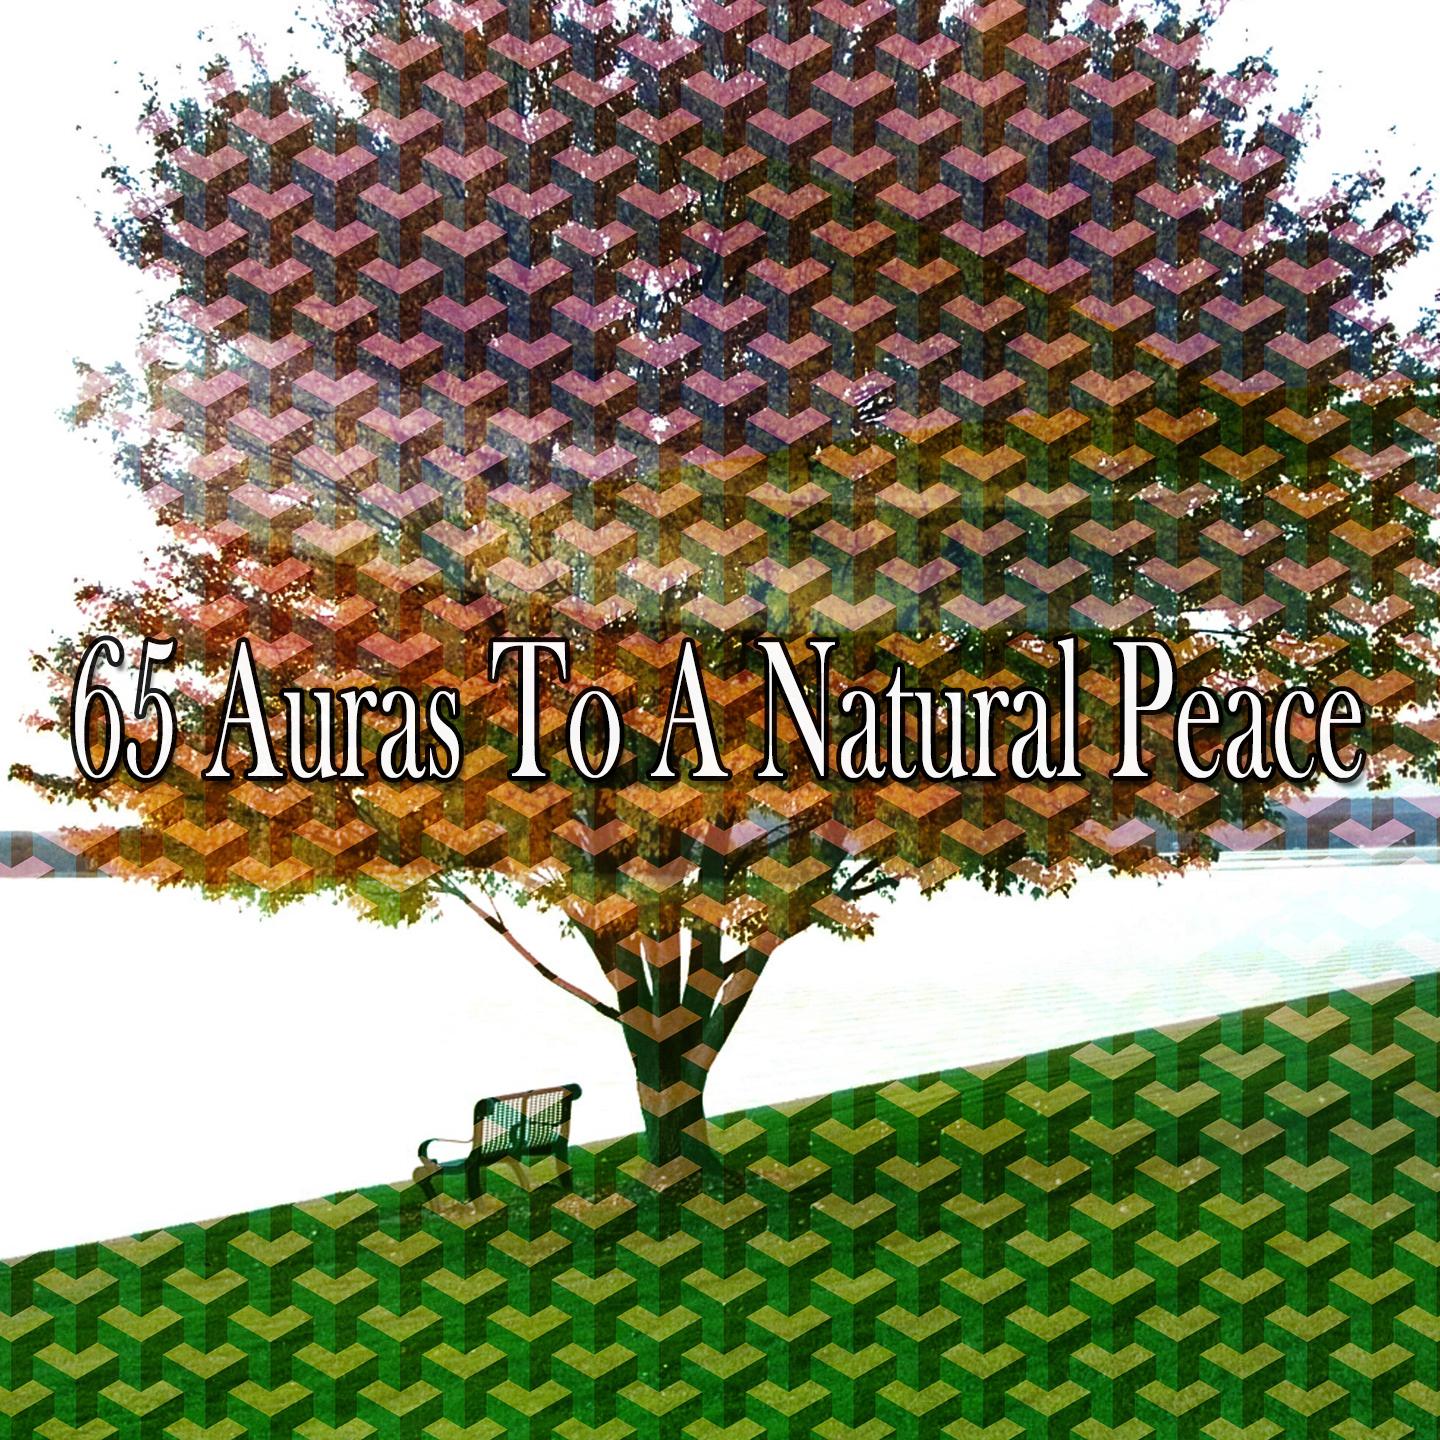 65 Auras to a Natural Peace